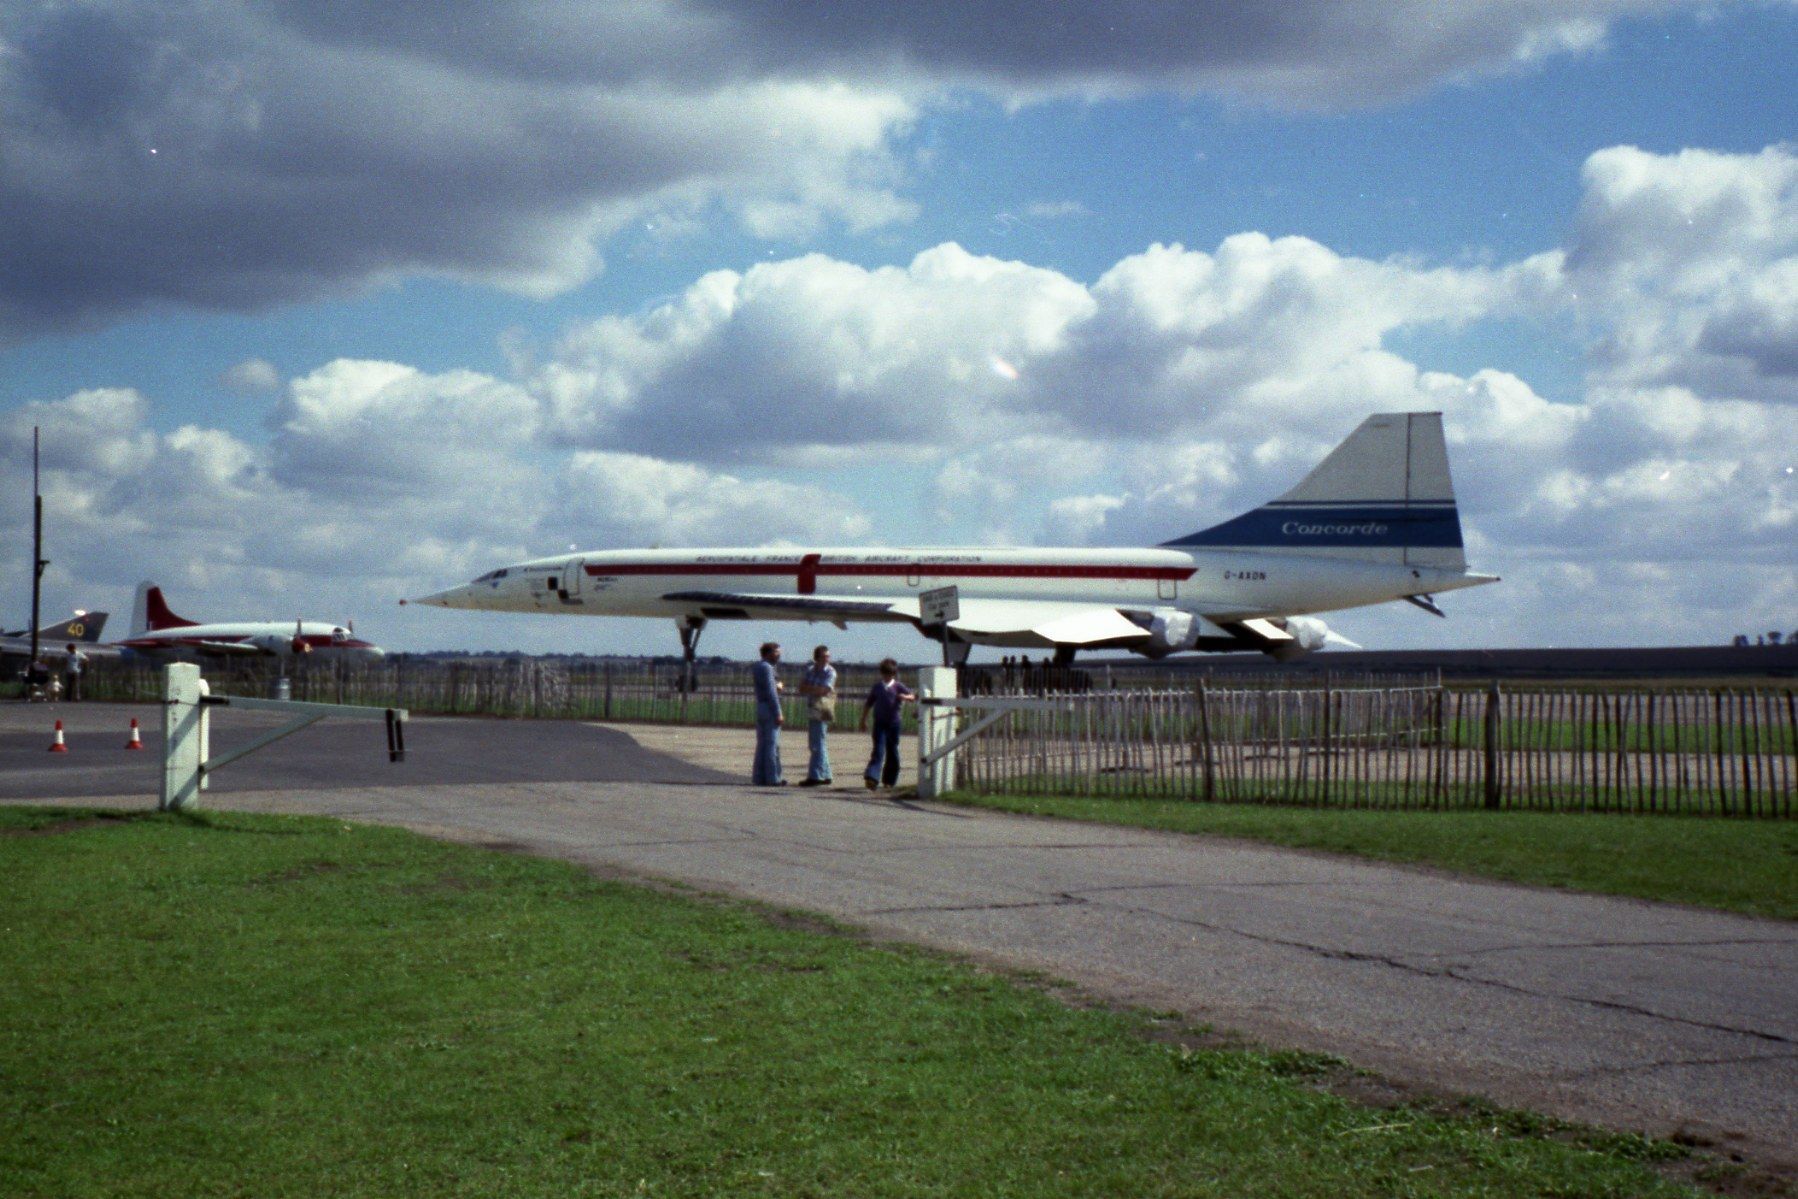 Fotogalerie / Concorde / Flickr / Creative Commons